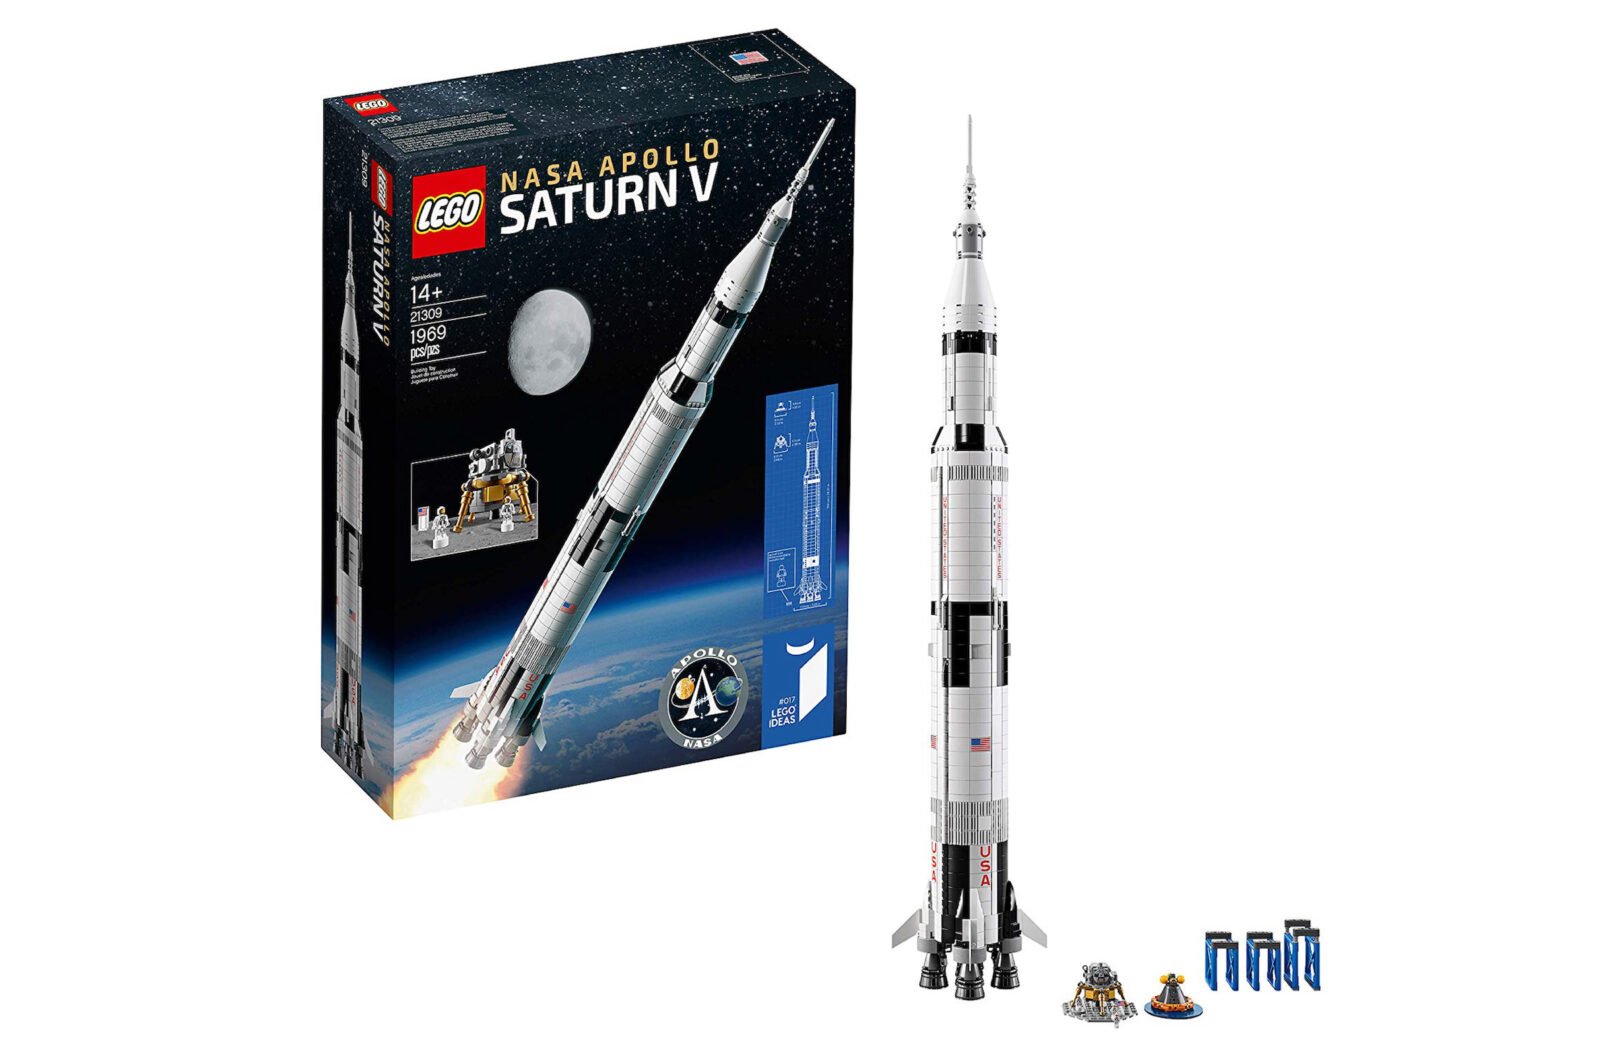 NASA Apollo Saturn V Rocket Lego Kit 8